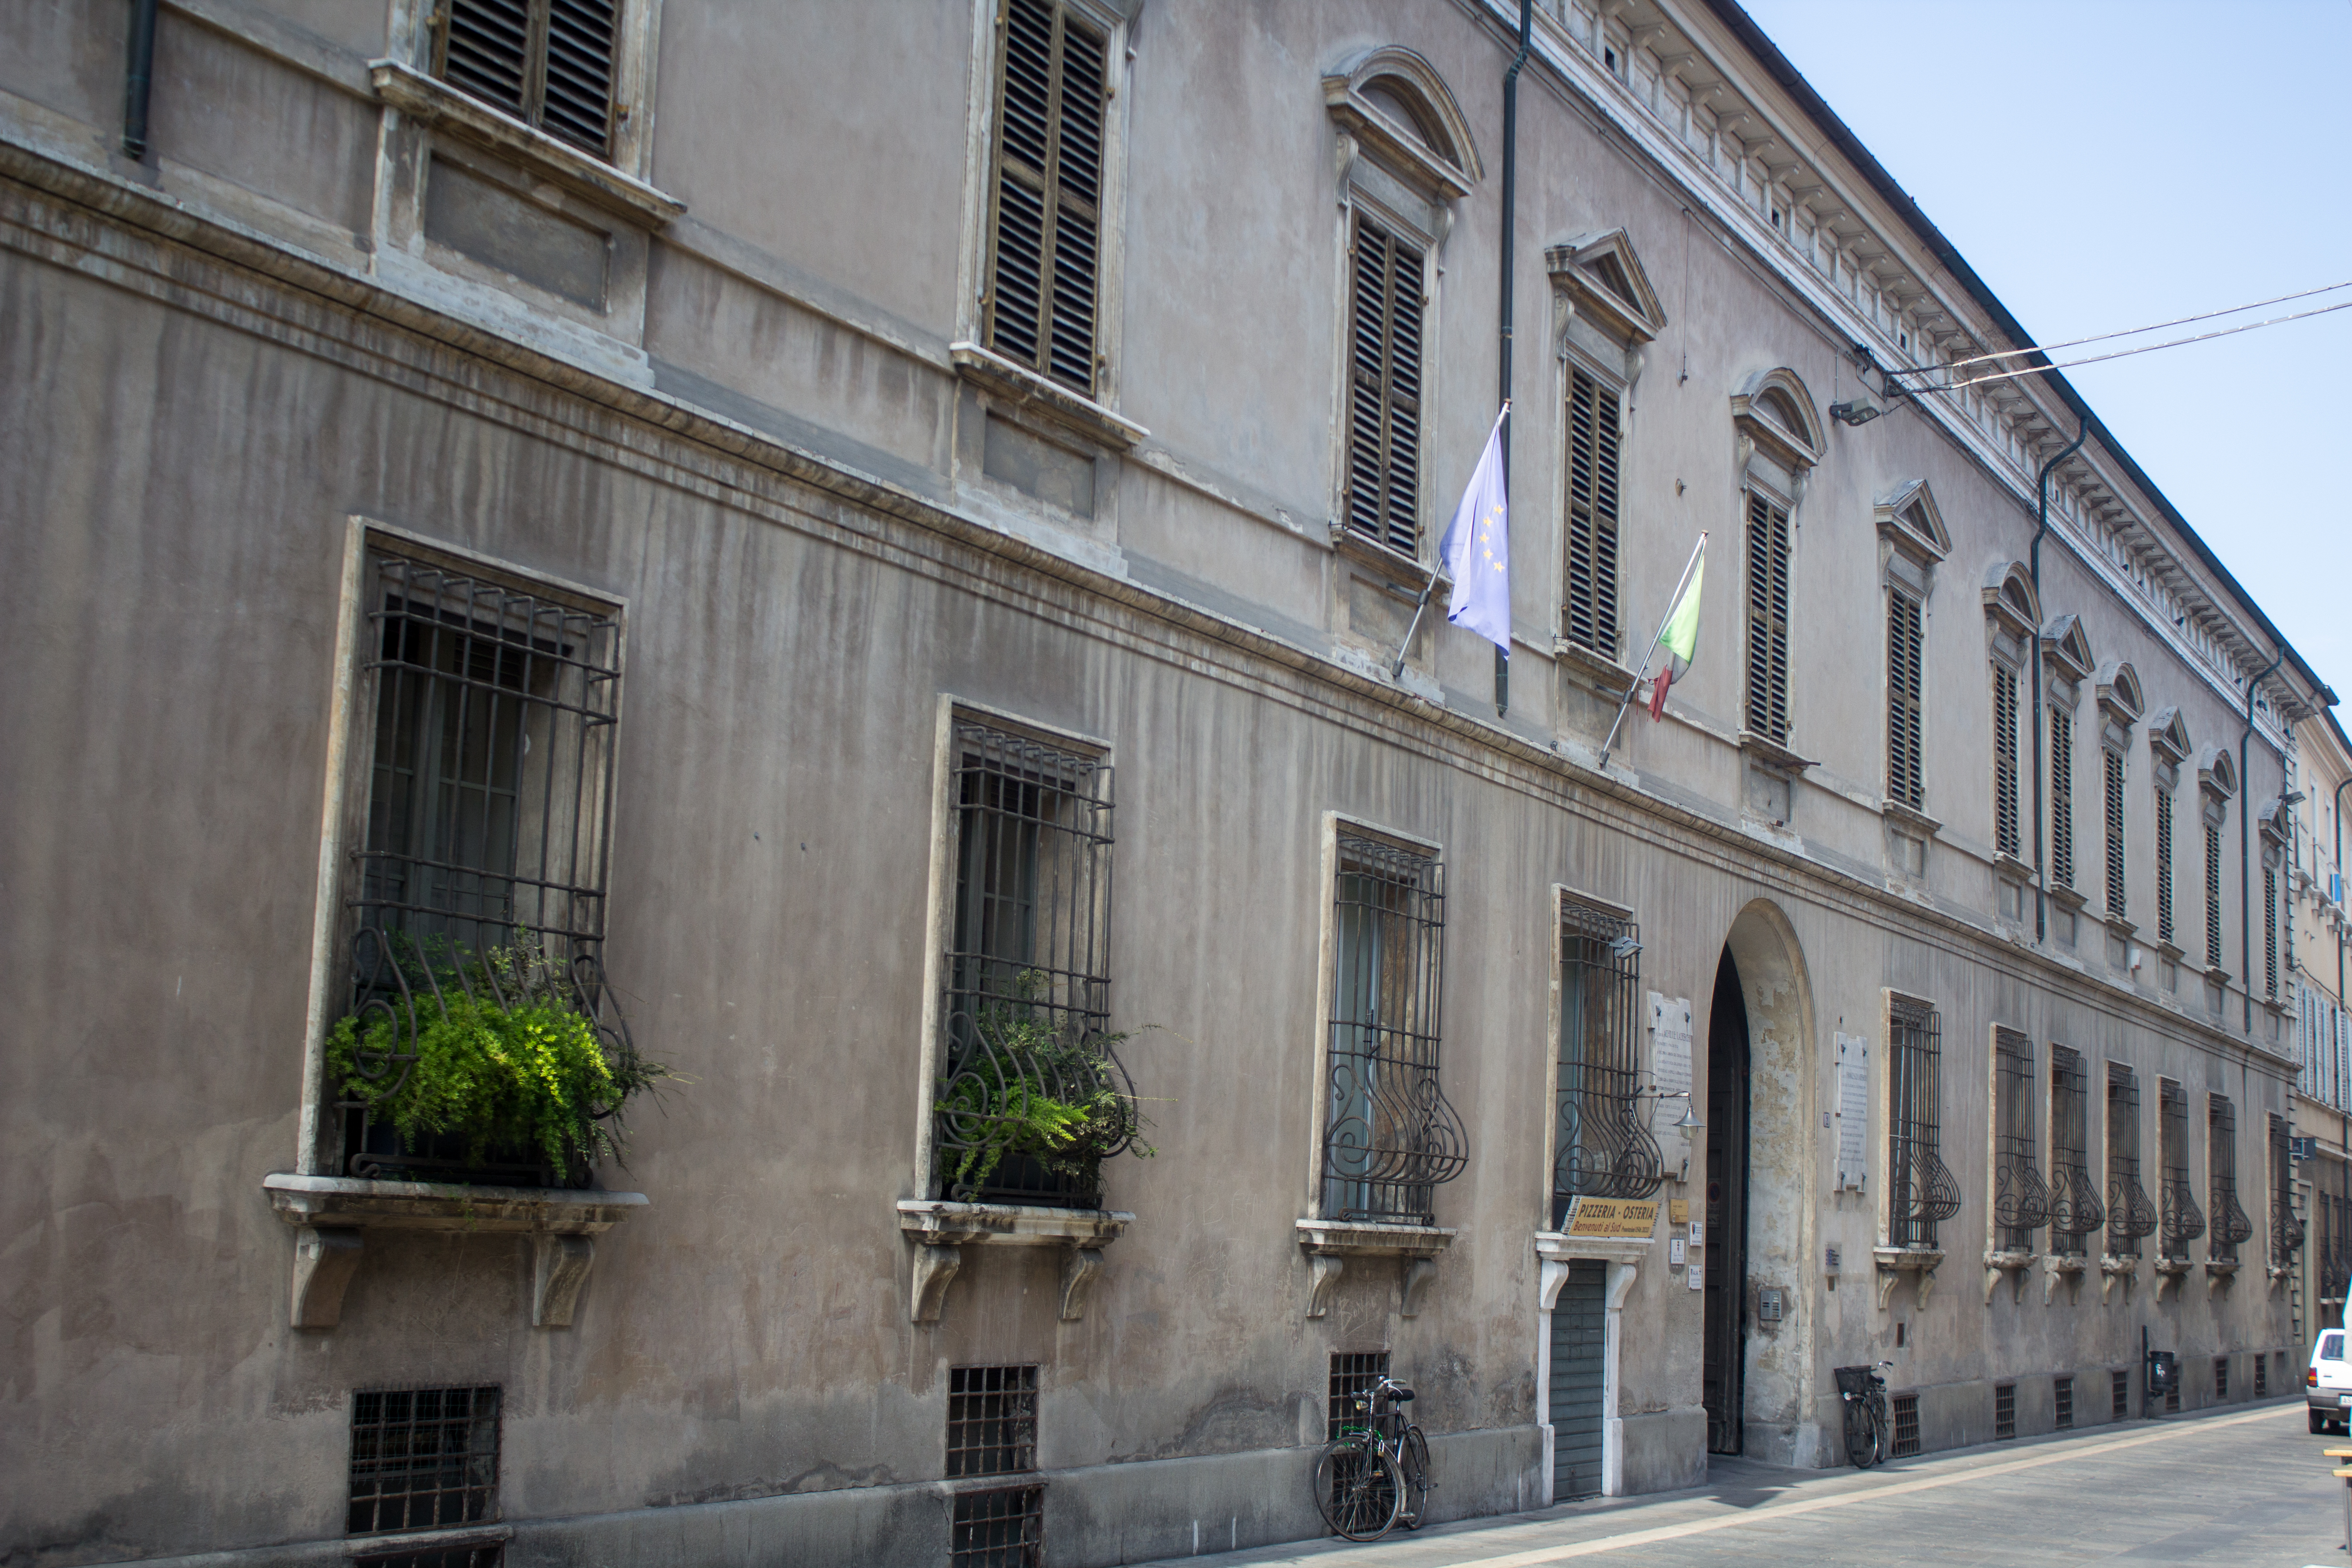 foto: https://upload.wikimedia.org/wikipedia/commons/a/ad/Palazzo_Laderchi_a_Faenza.jpg